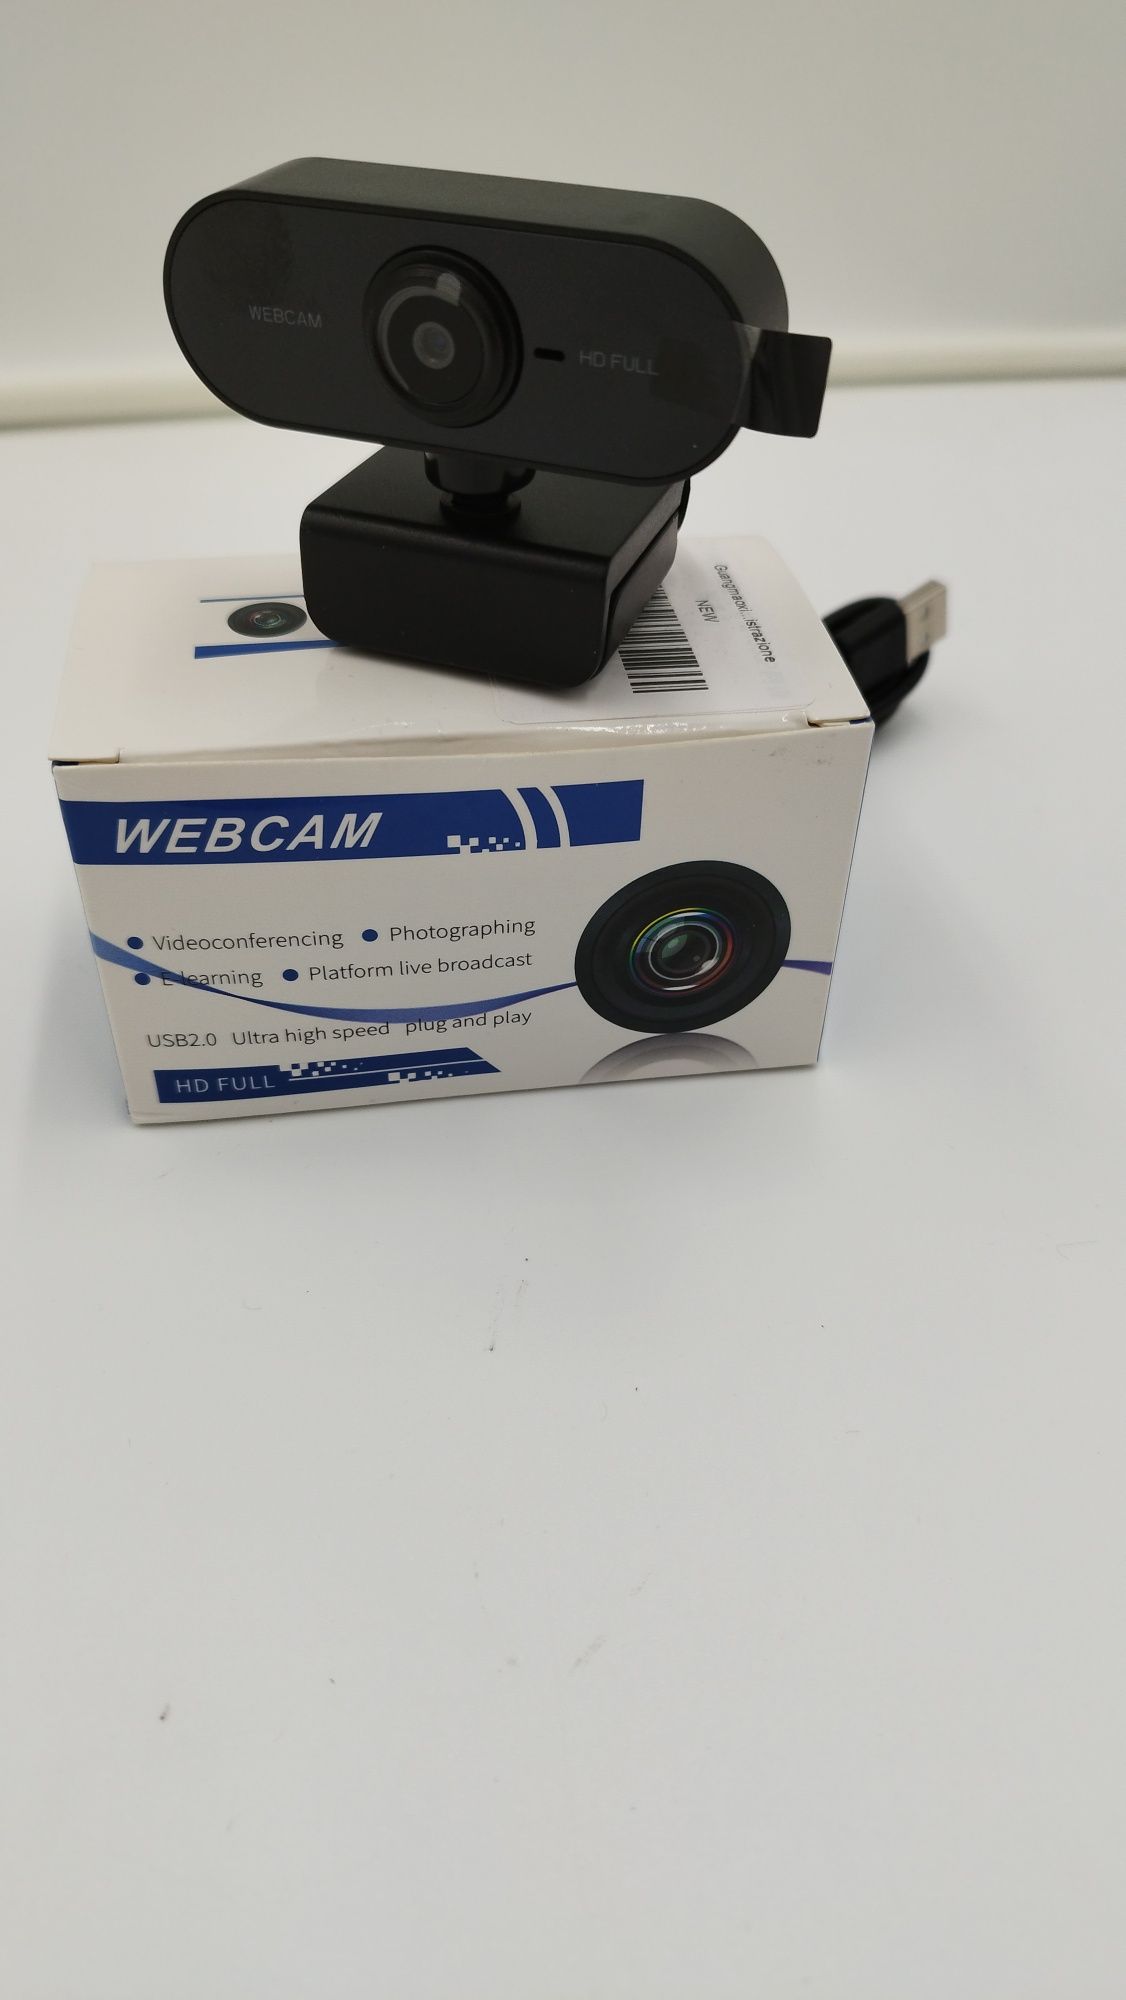 Kamerka internetowa Webcam 1080P HD FULL